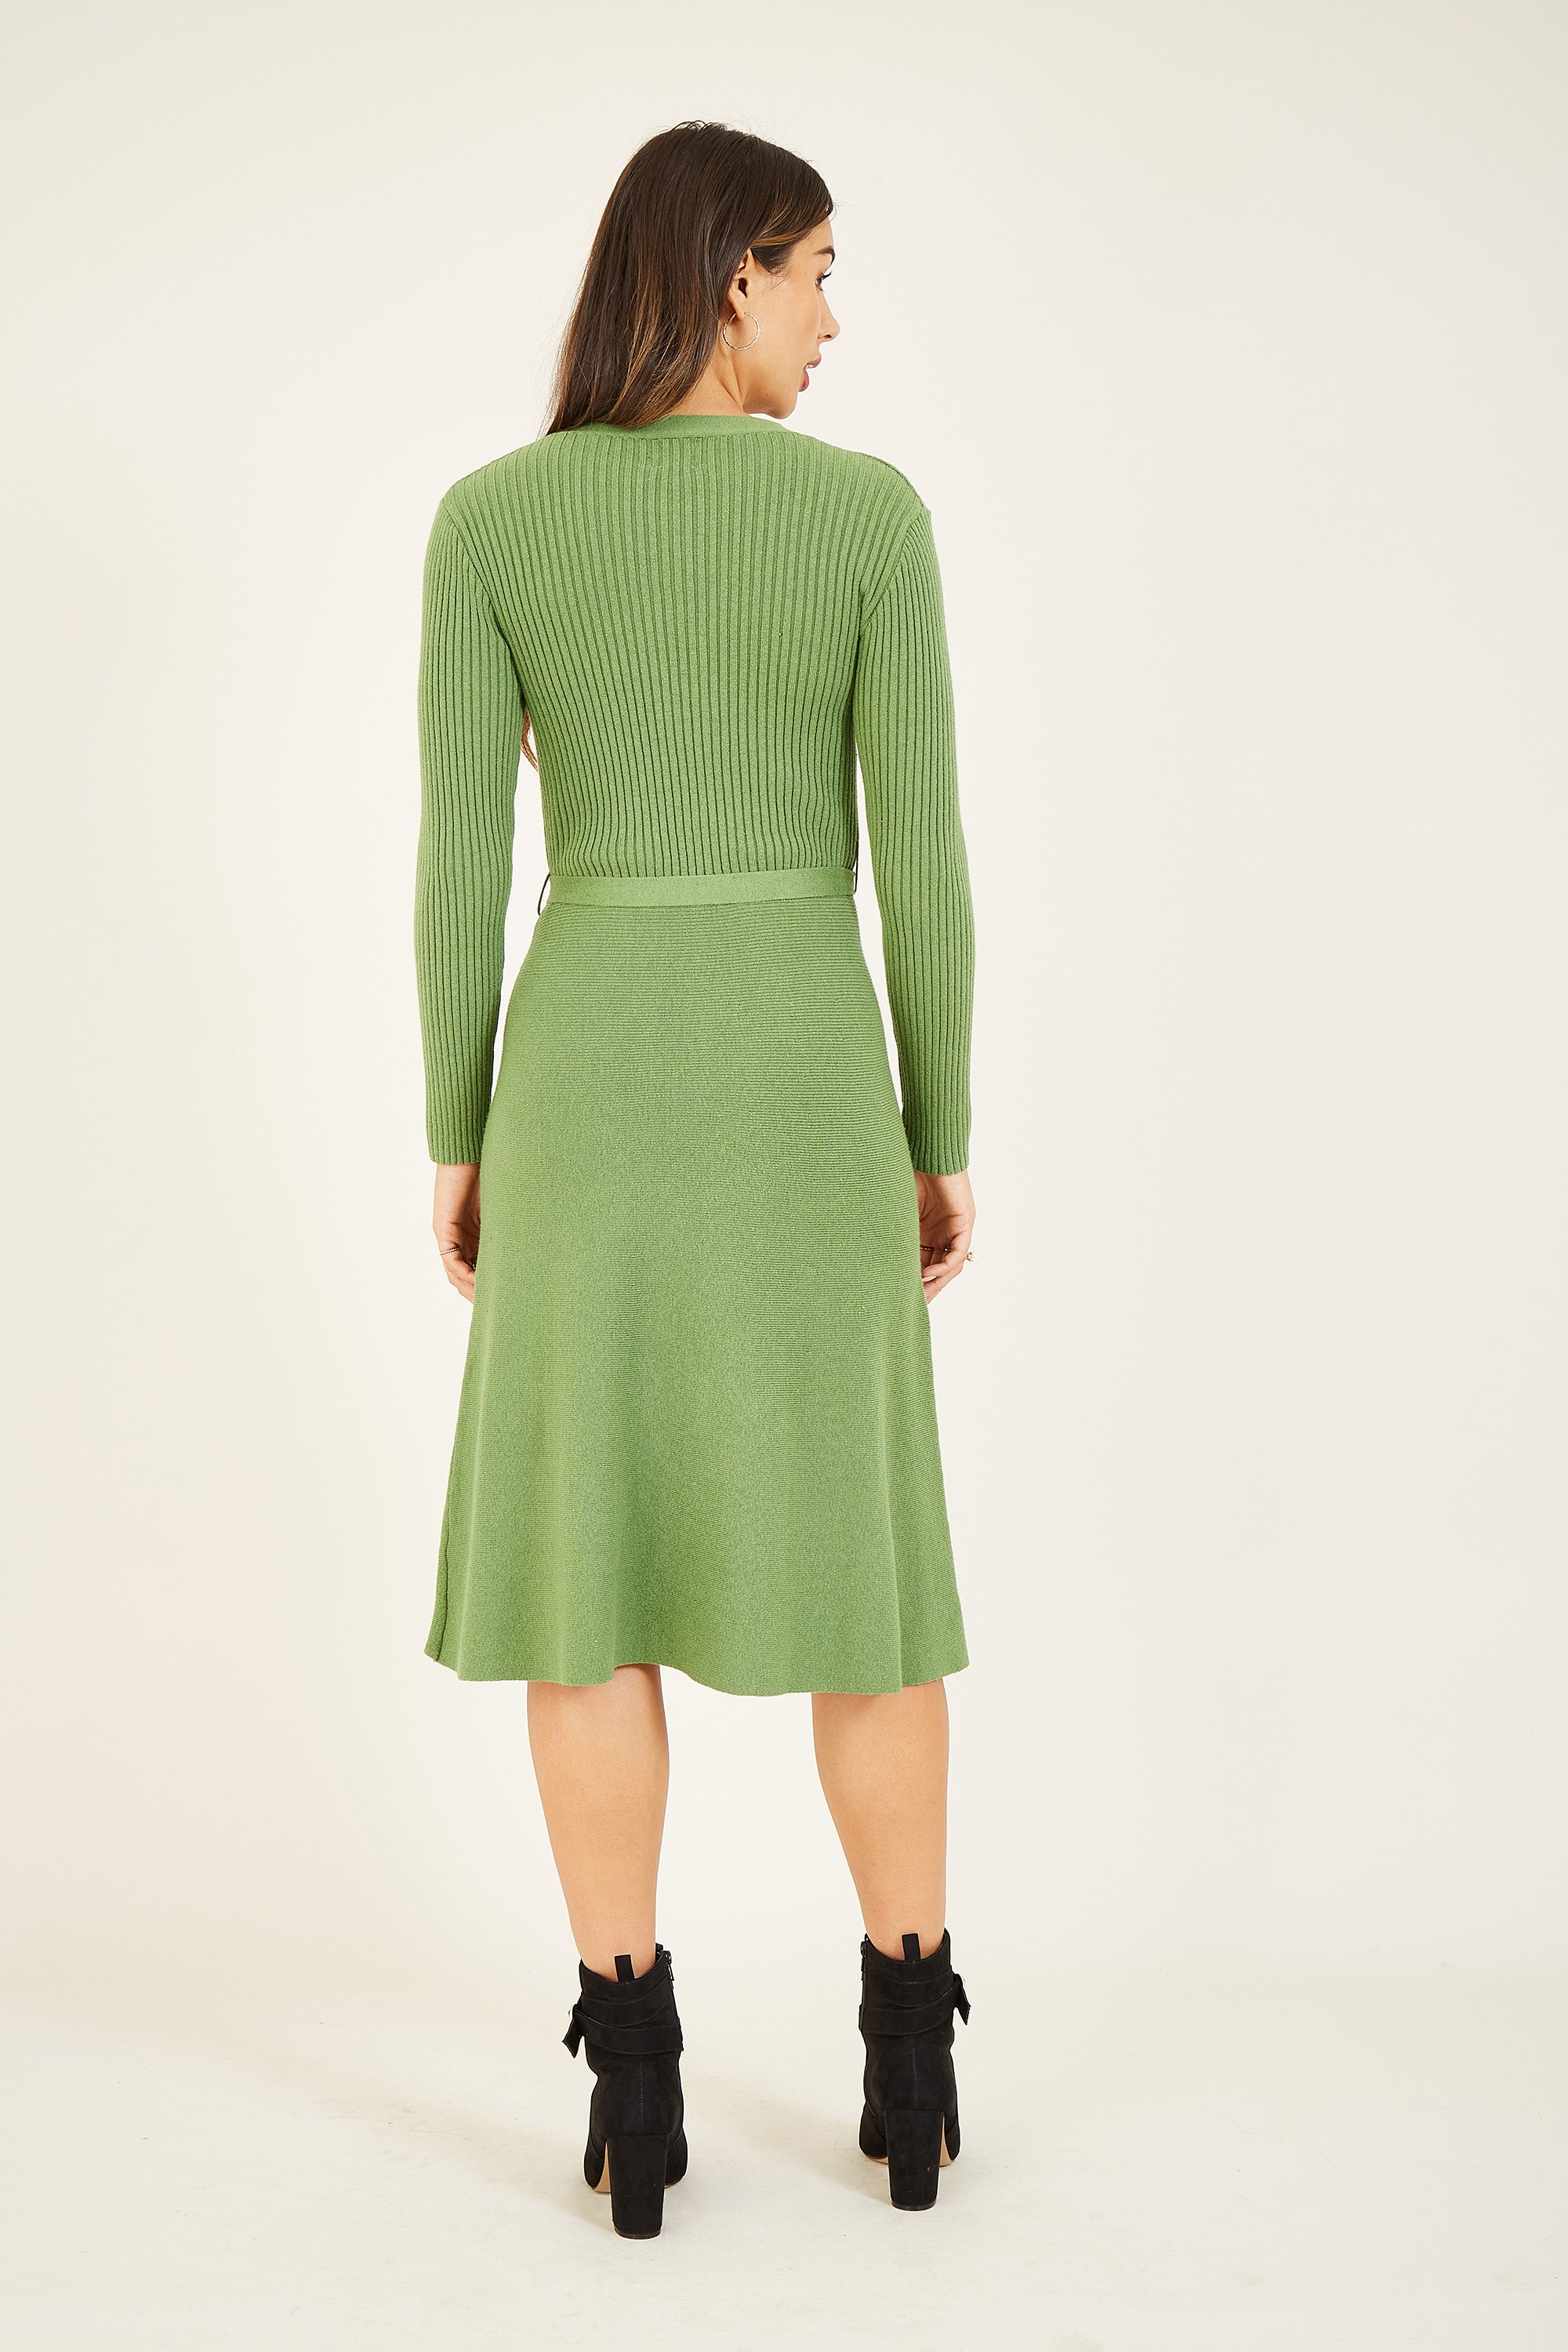 Yumi Green Knitted Skater Dress